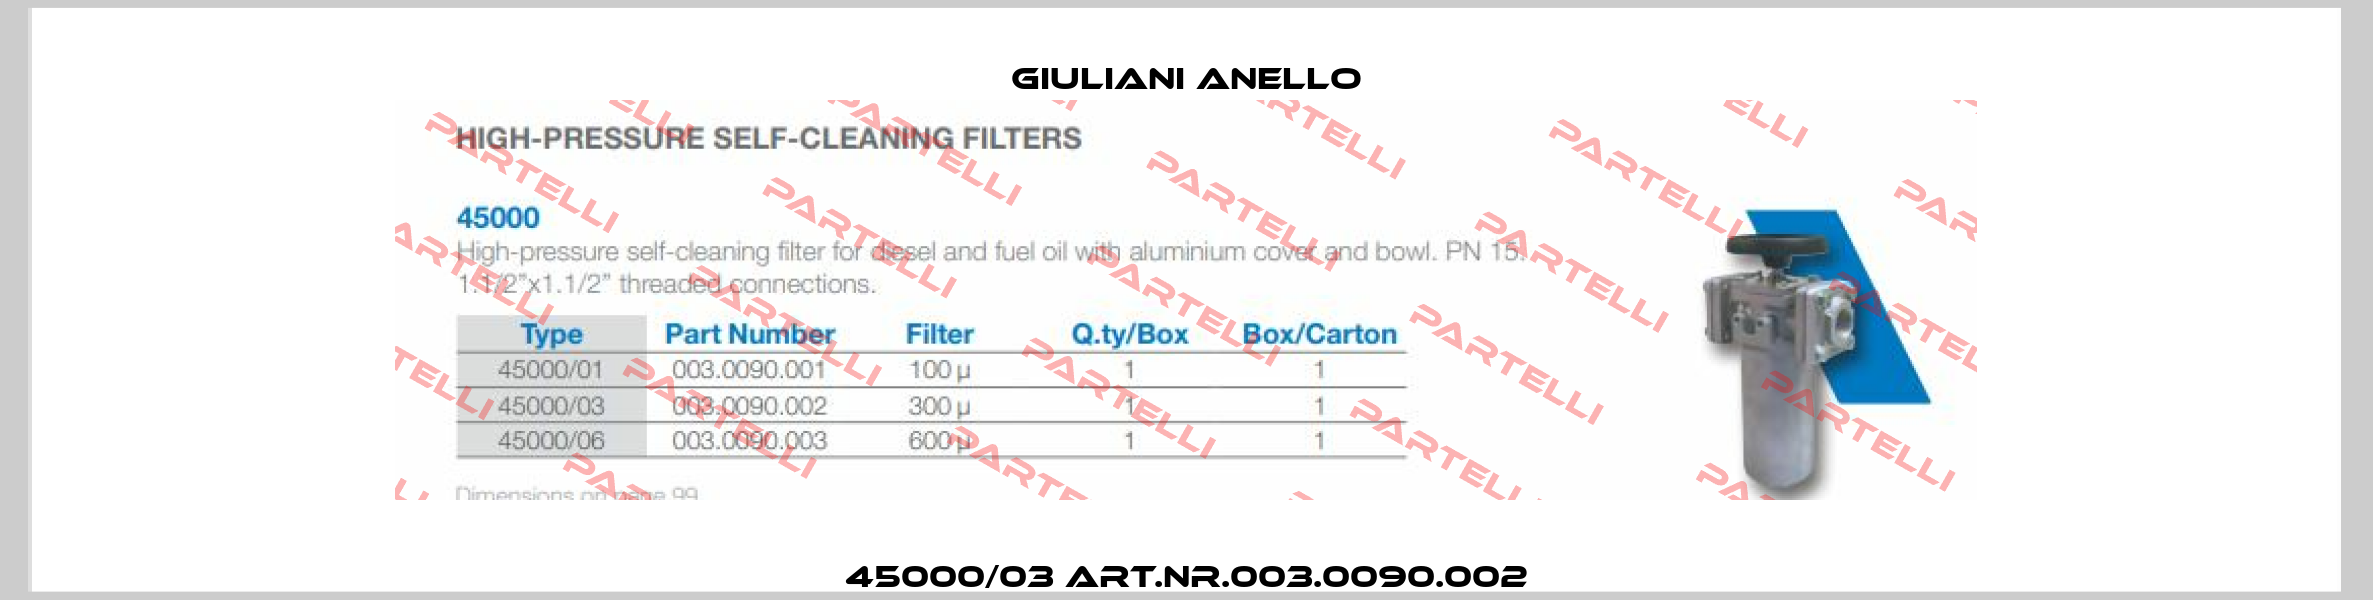 45000/03 Art.Nr.003.0090.002 Giuliani Anello